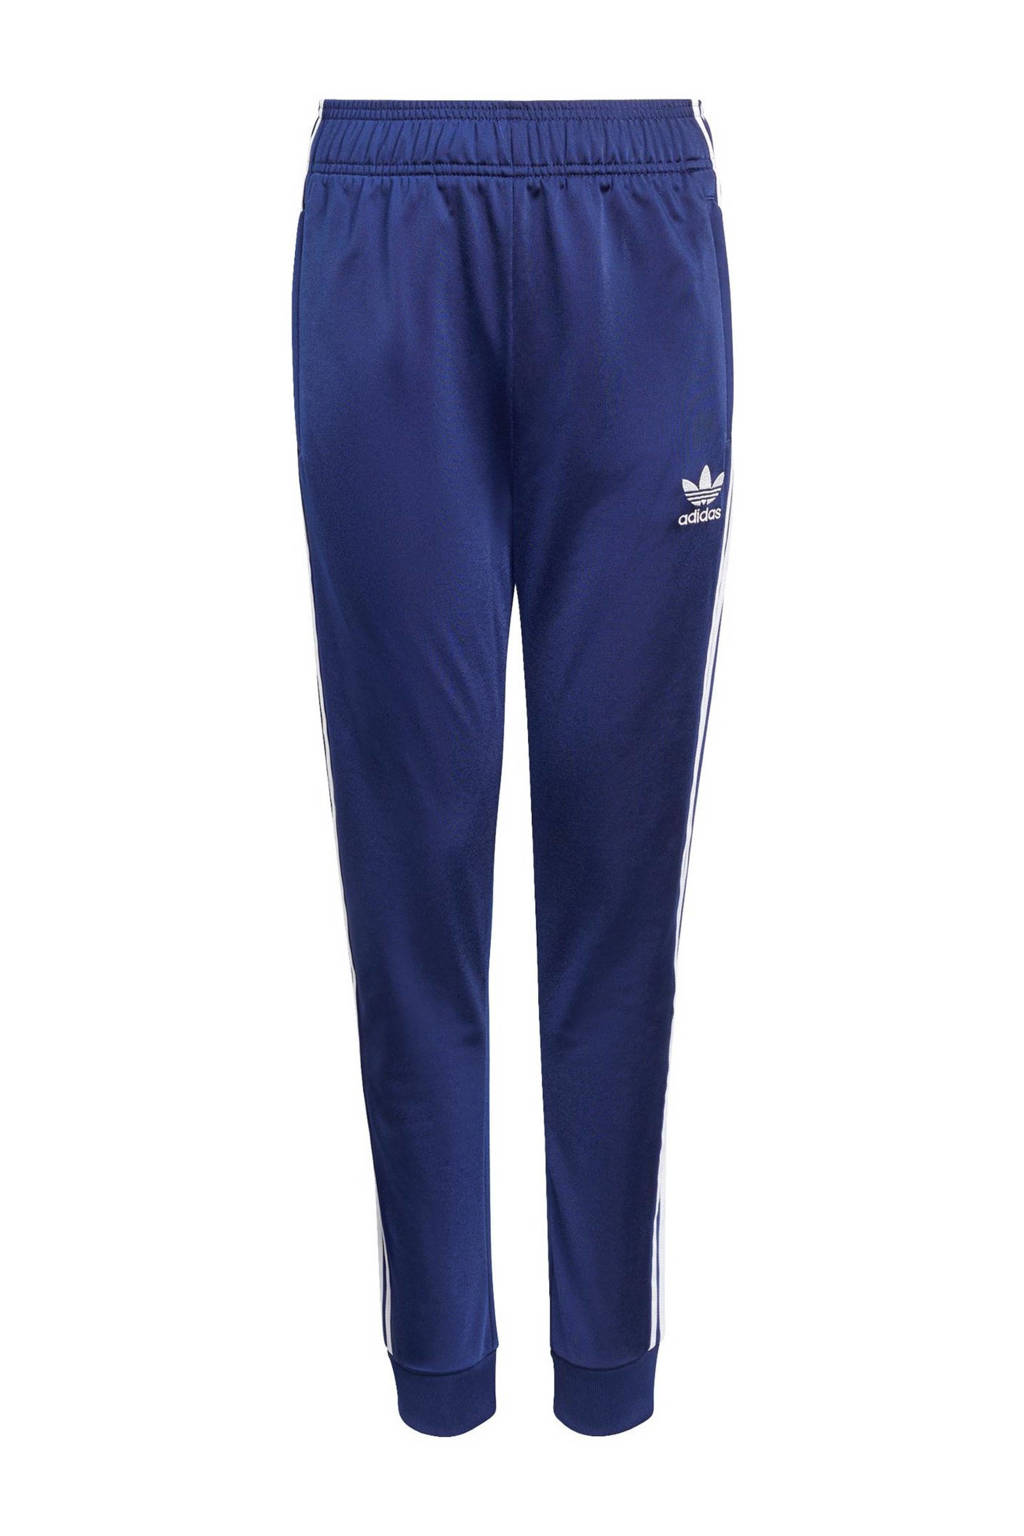 adidas Originals regular fit joggingbroek Super Star Adicolor van gerecycled polyester donkerblauw/wit, Donkerblauw/wit